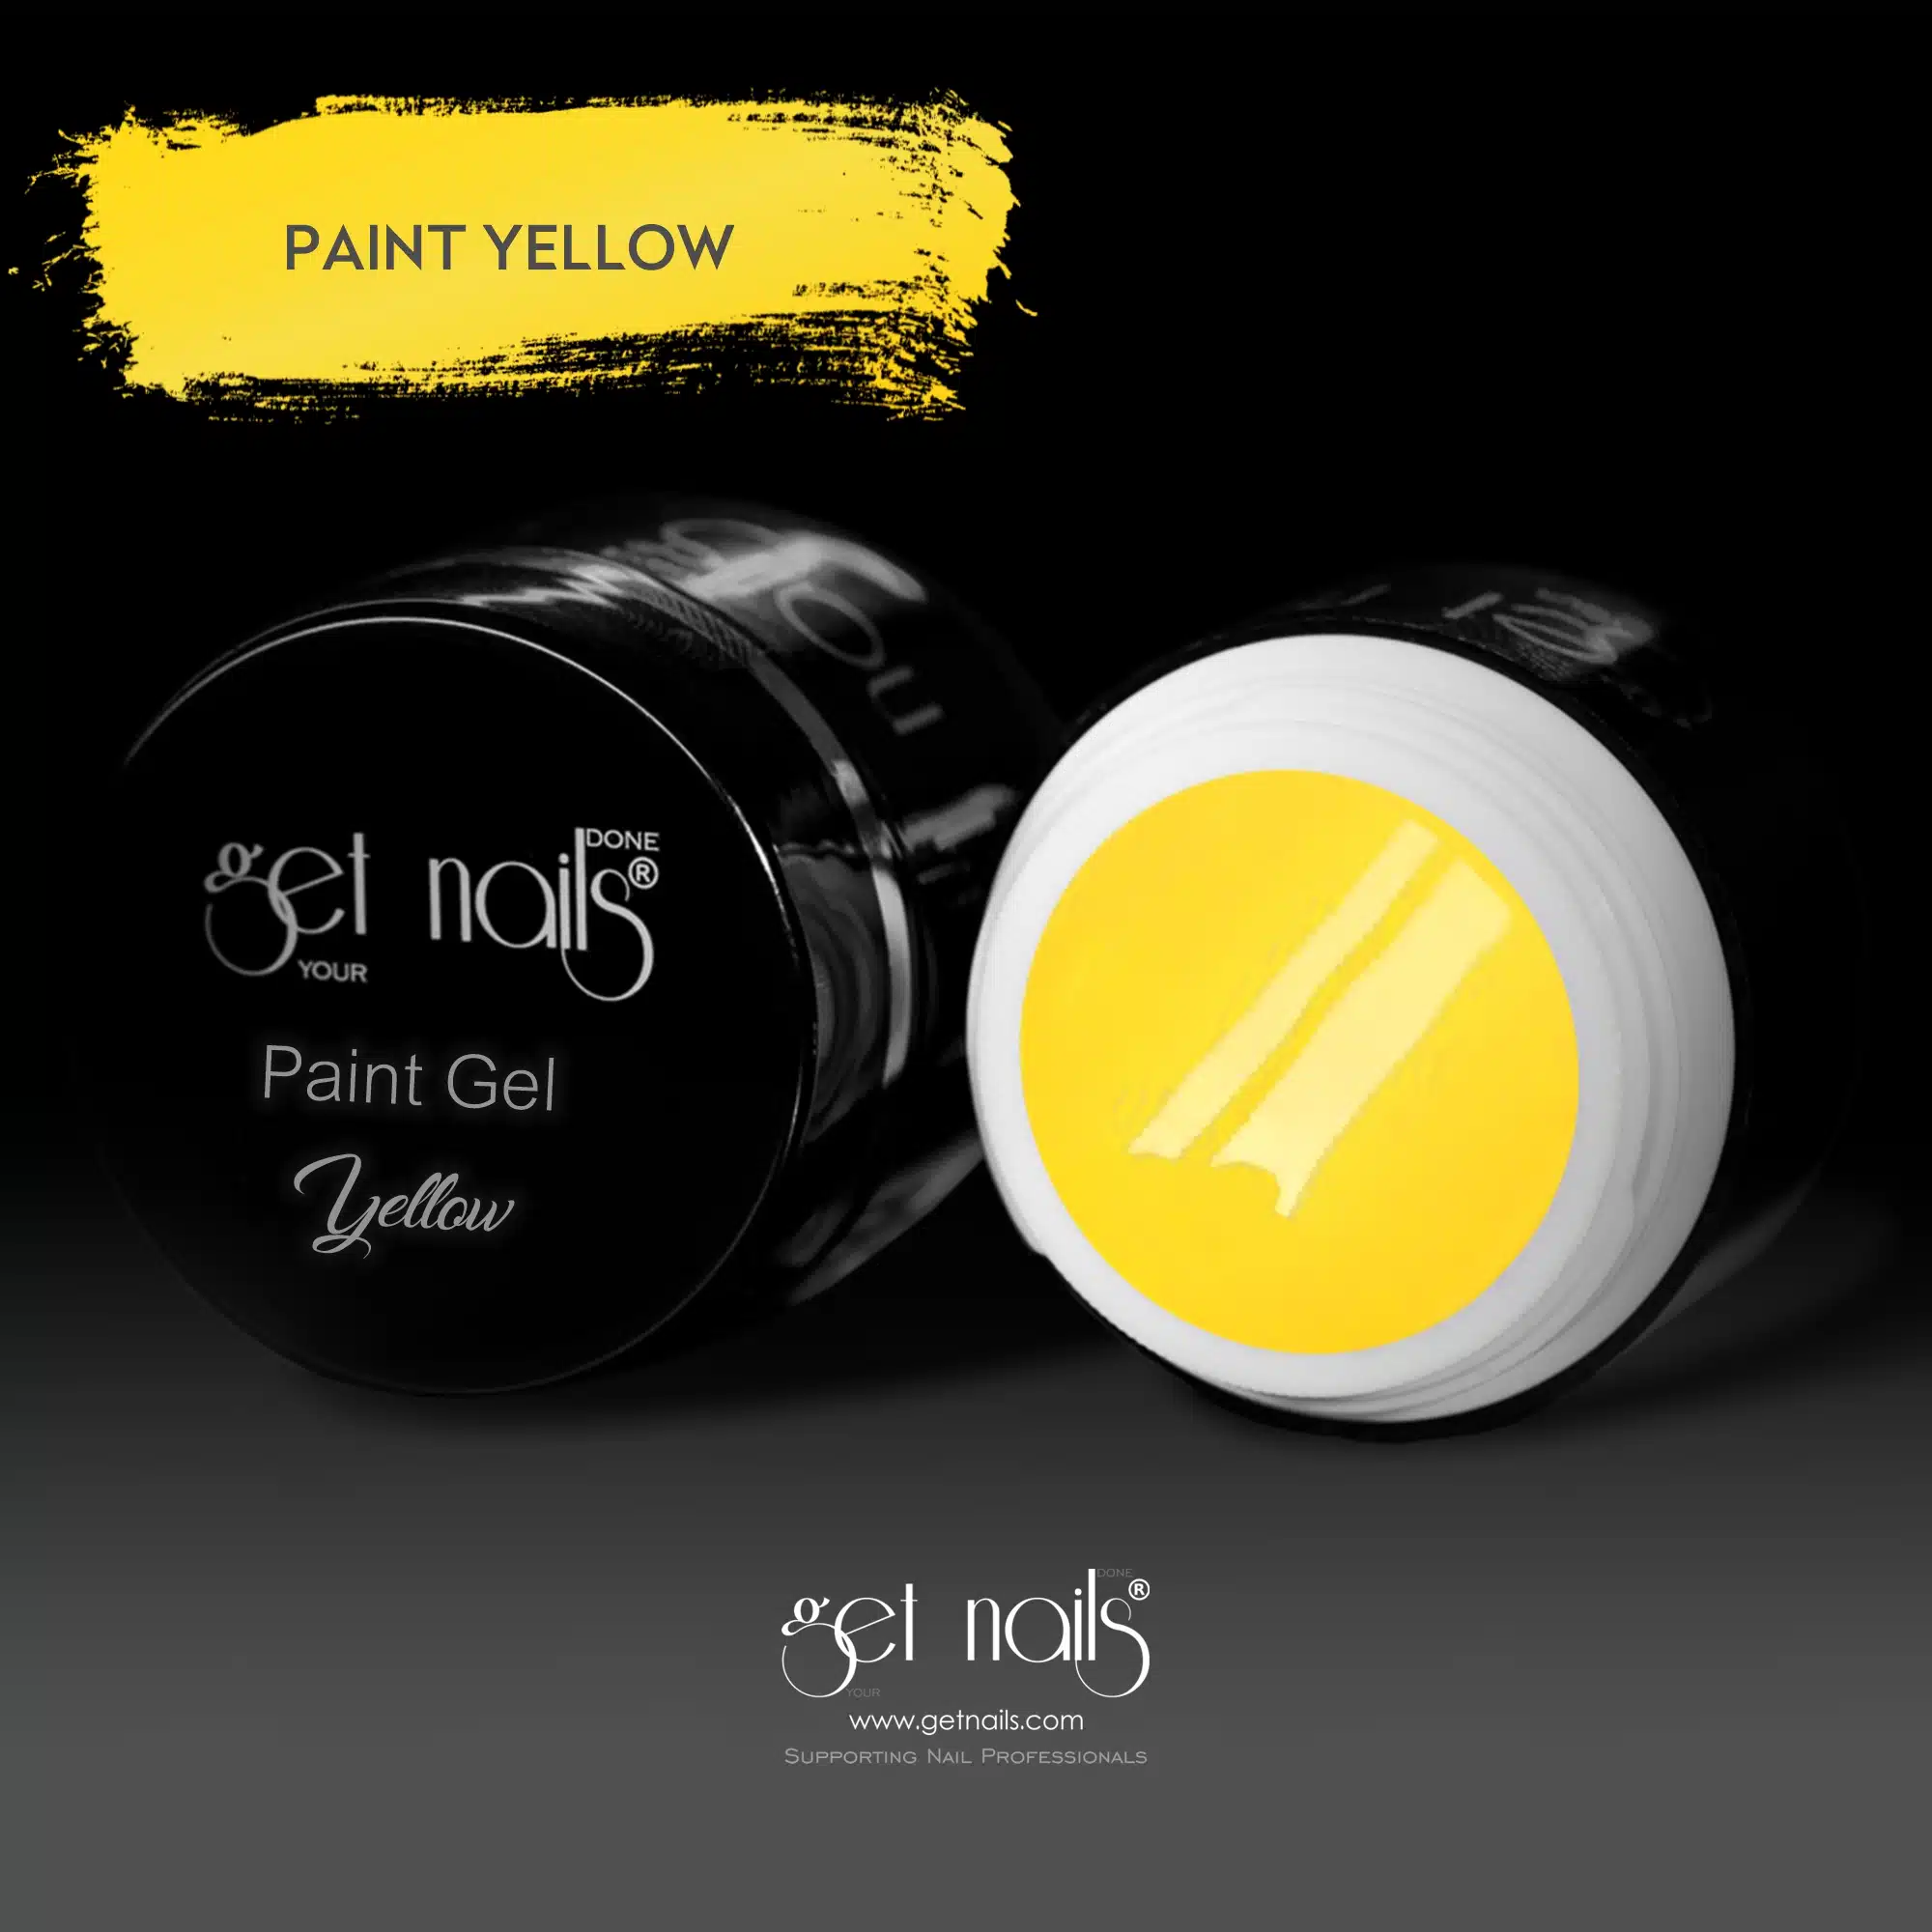 Get Nails Austria - Paint Gel Yellow 5g